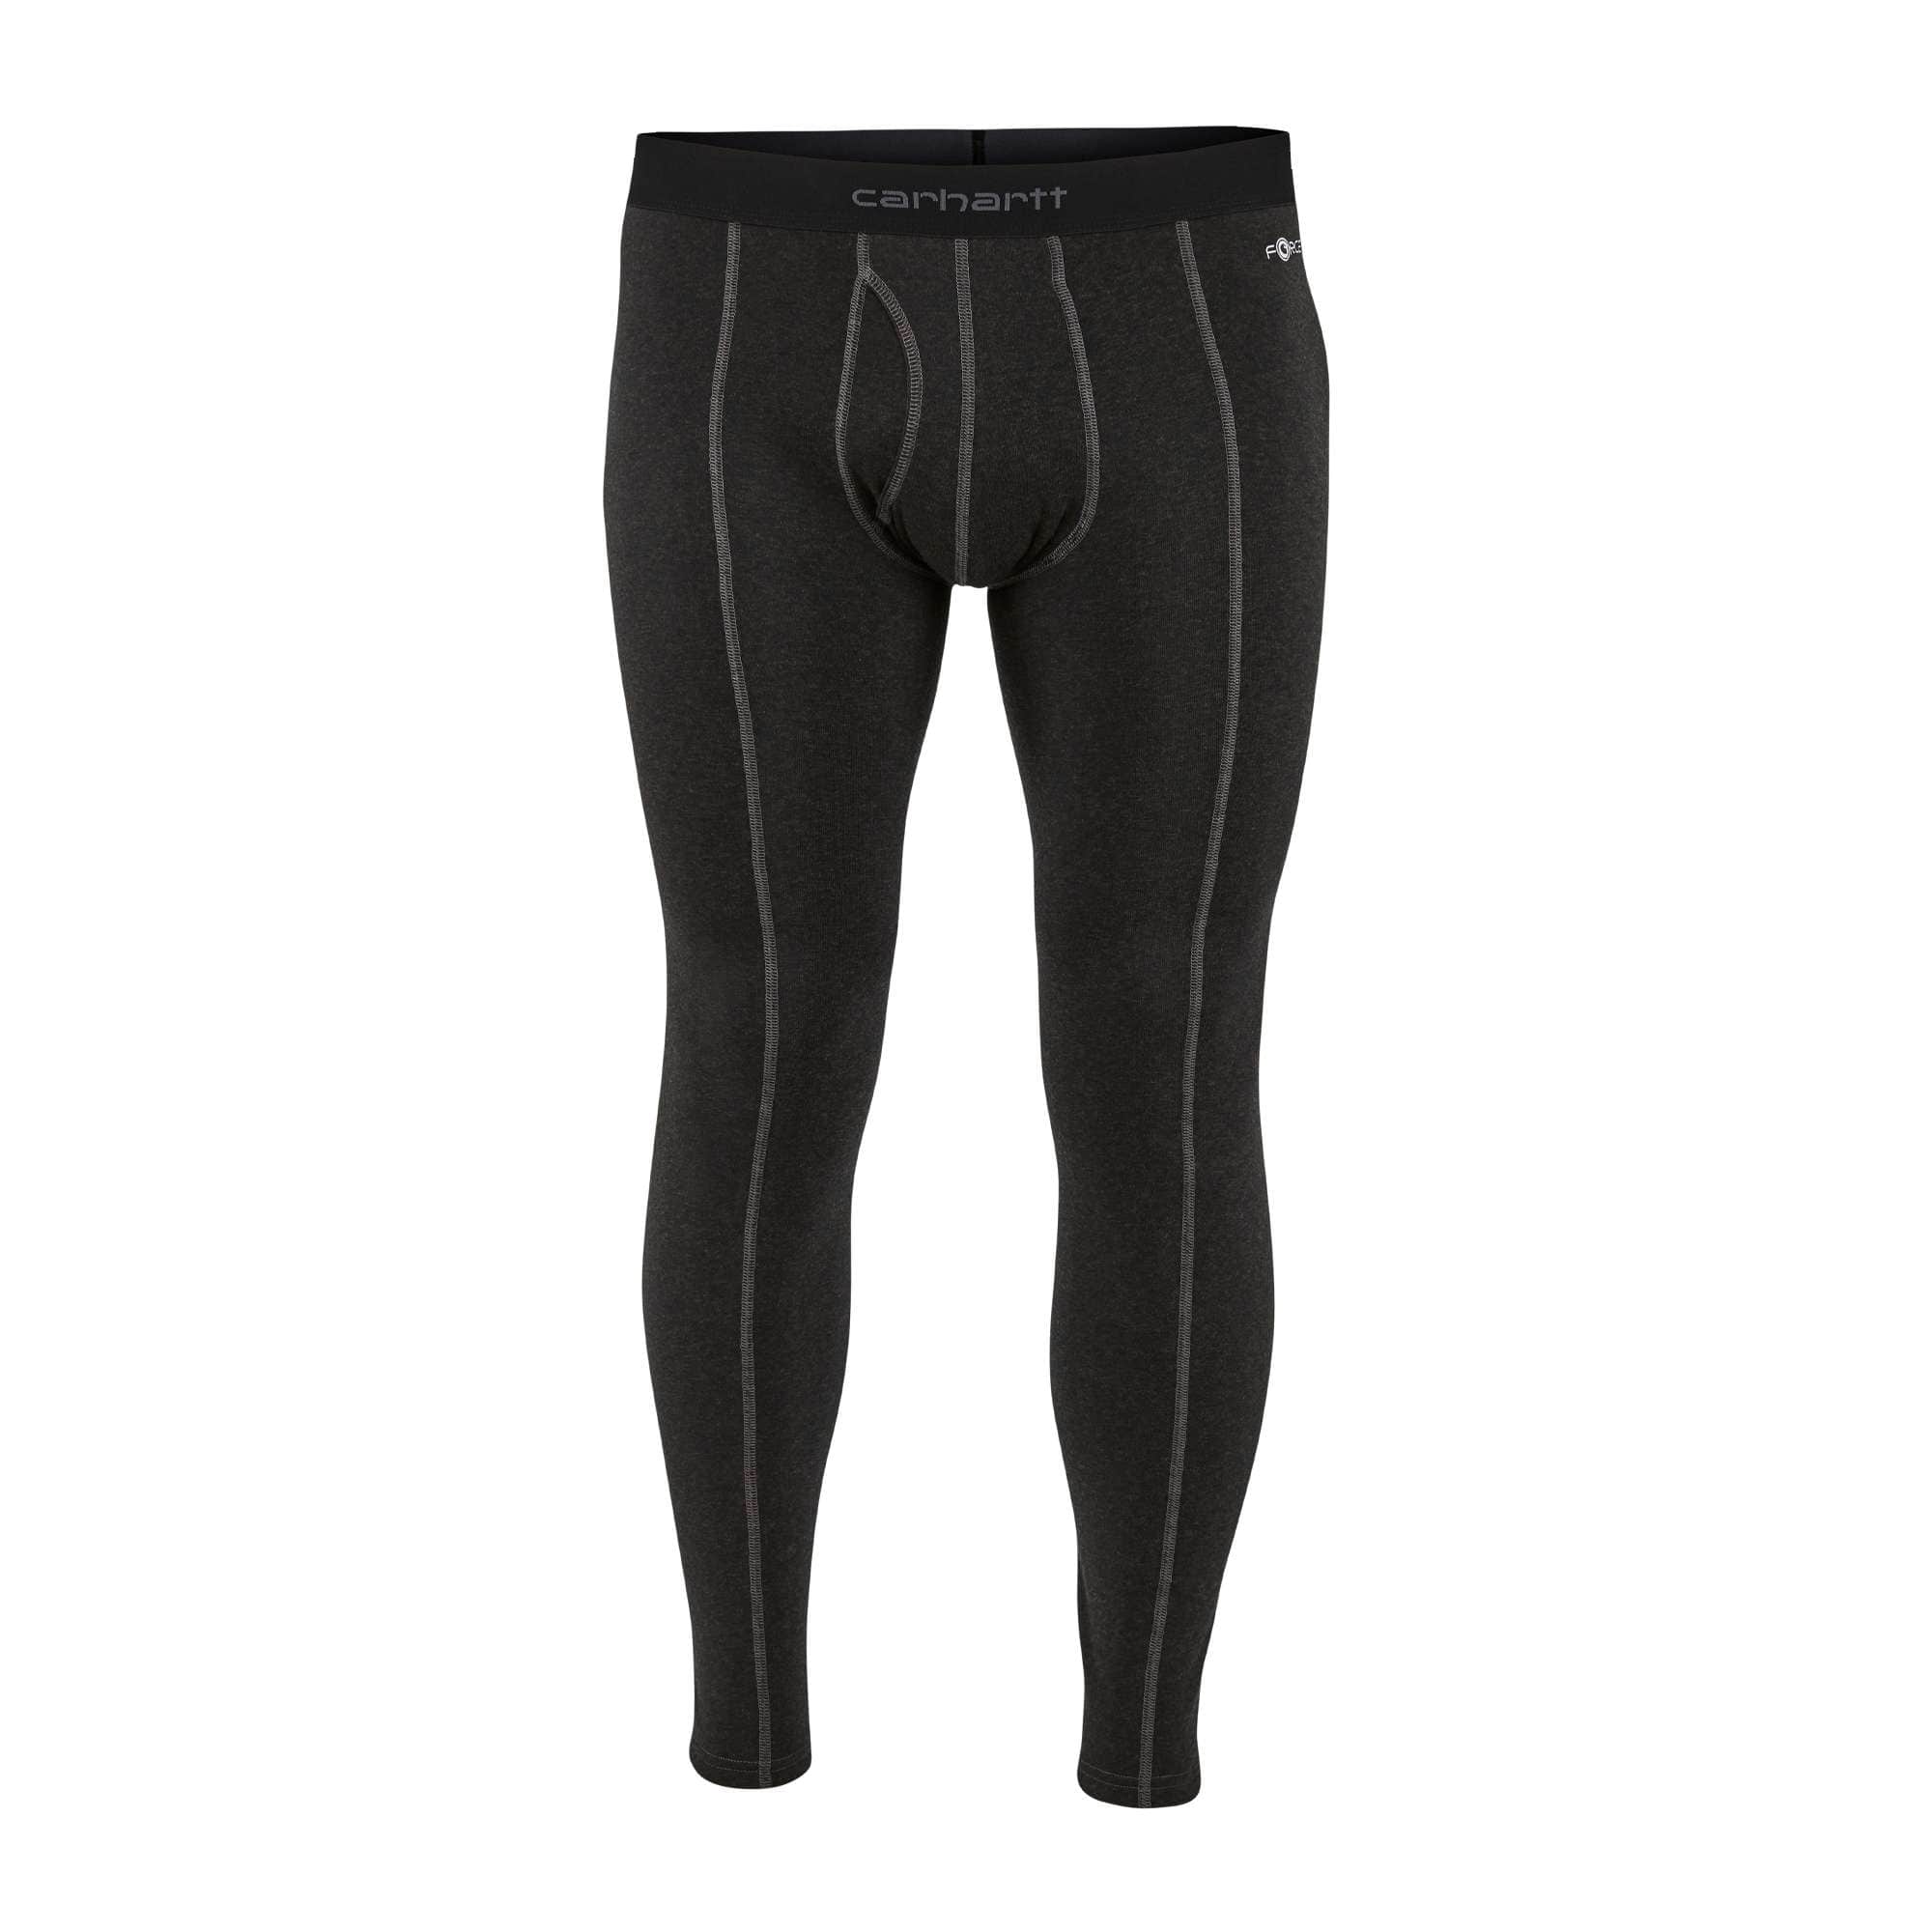 Winter Thick Fleece Lined Leggings Bottom Pants Men's Long Johns Thermal  Underwear Home Pajamas BLACK ( FLEECE LINNING)-3XL 